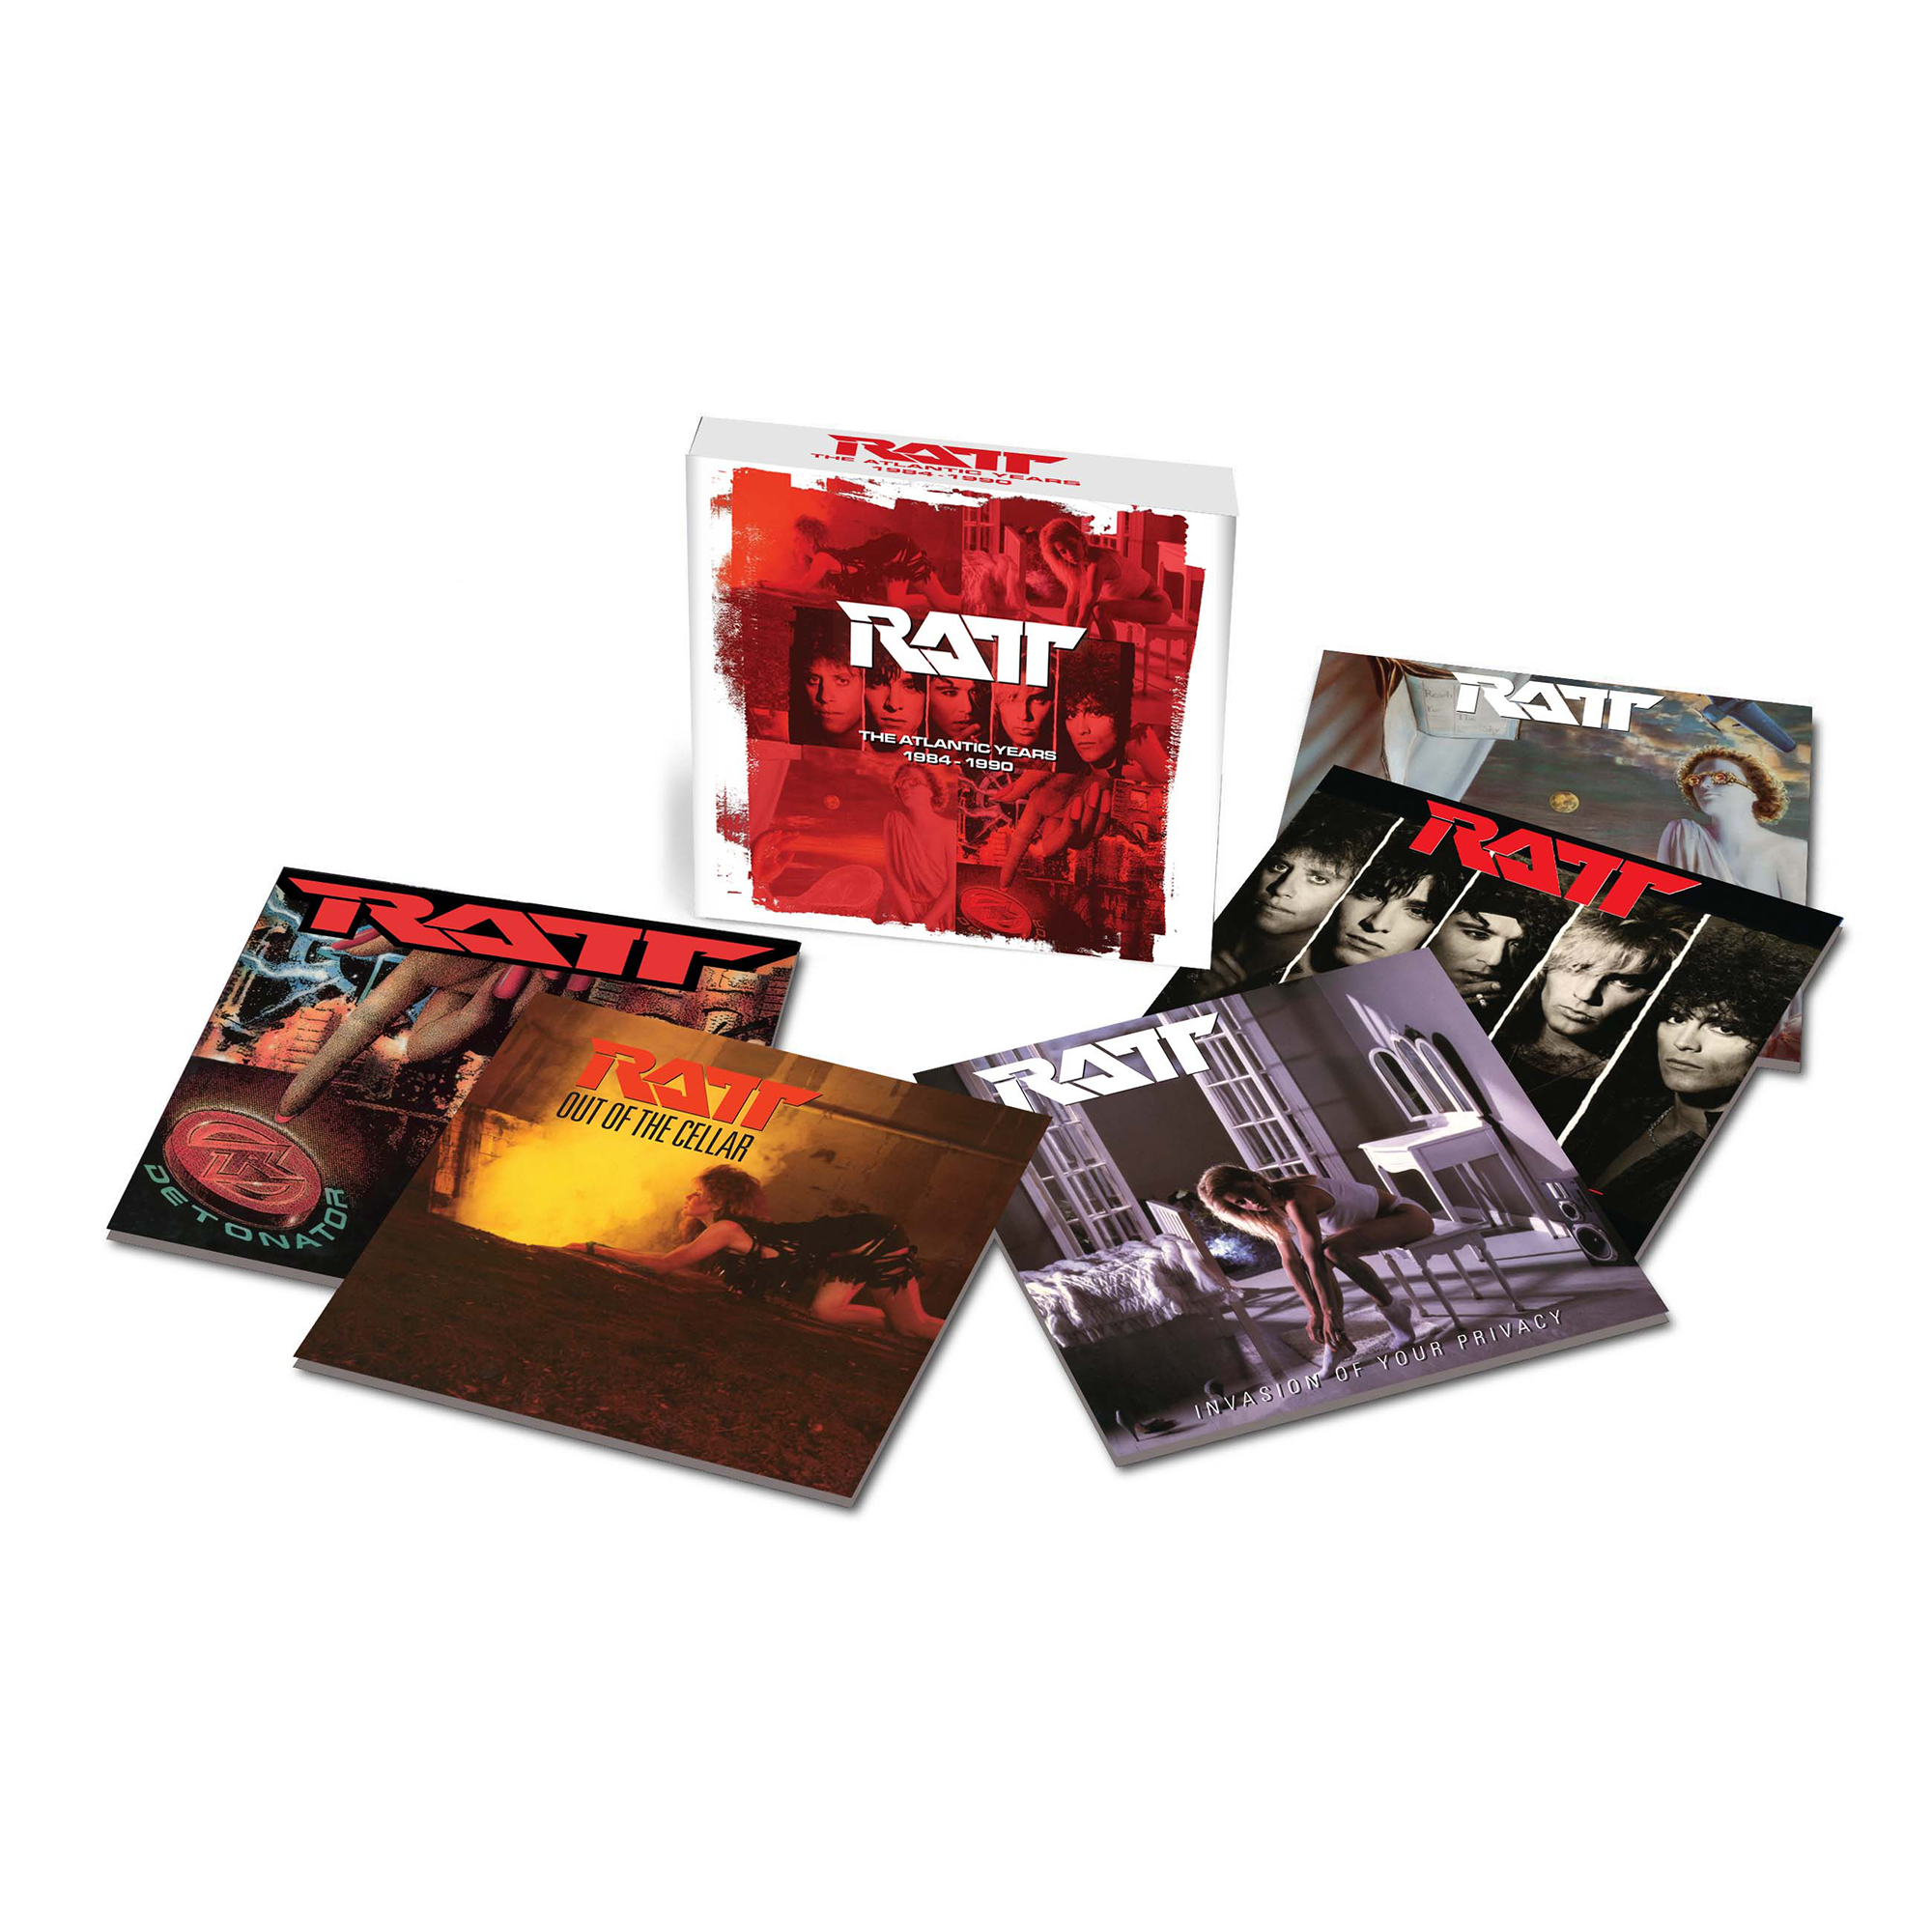 RATT - The Atlantic Years 1984 - 1991: Limited Edition 5CD Box Set